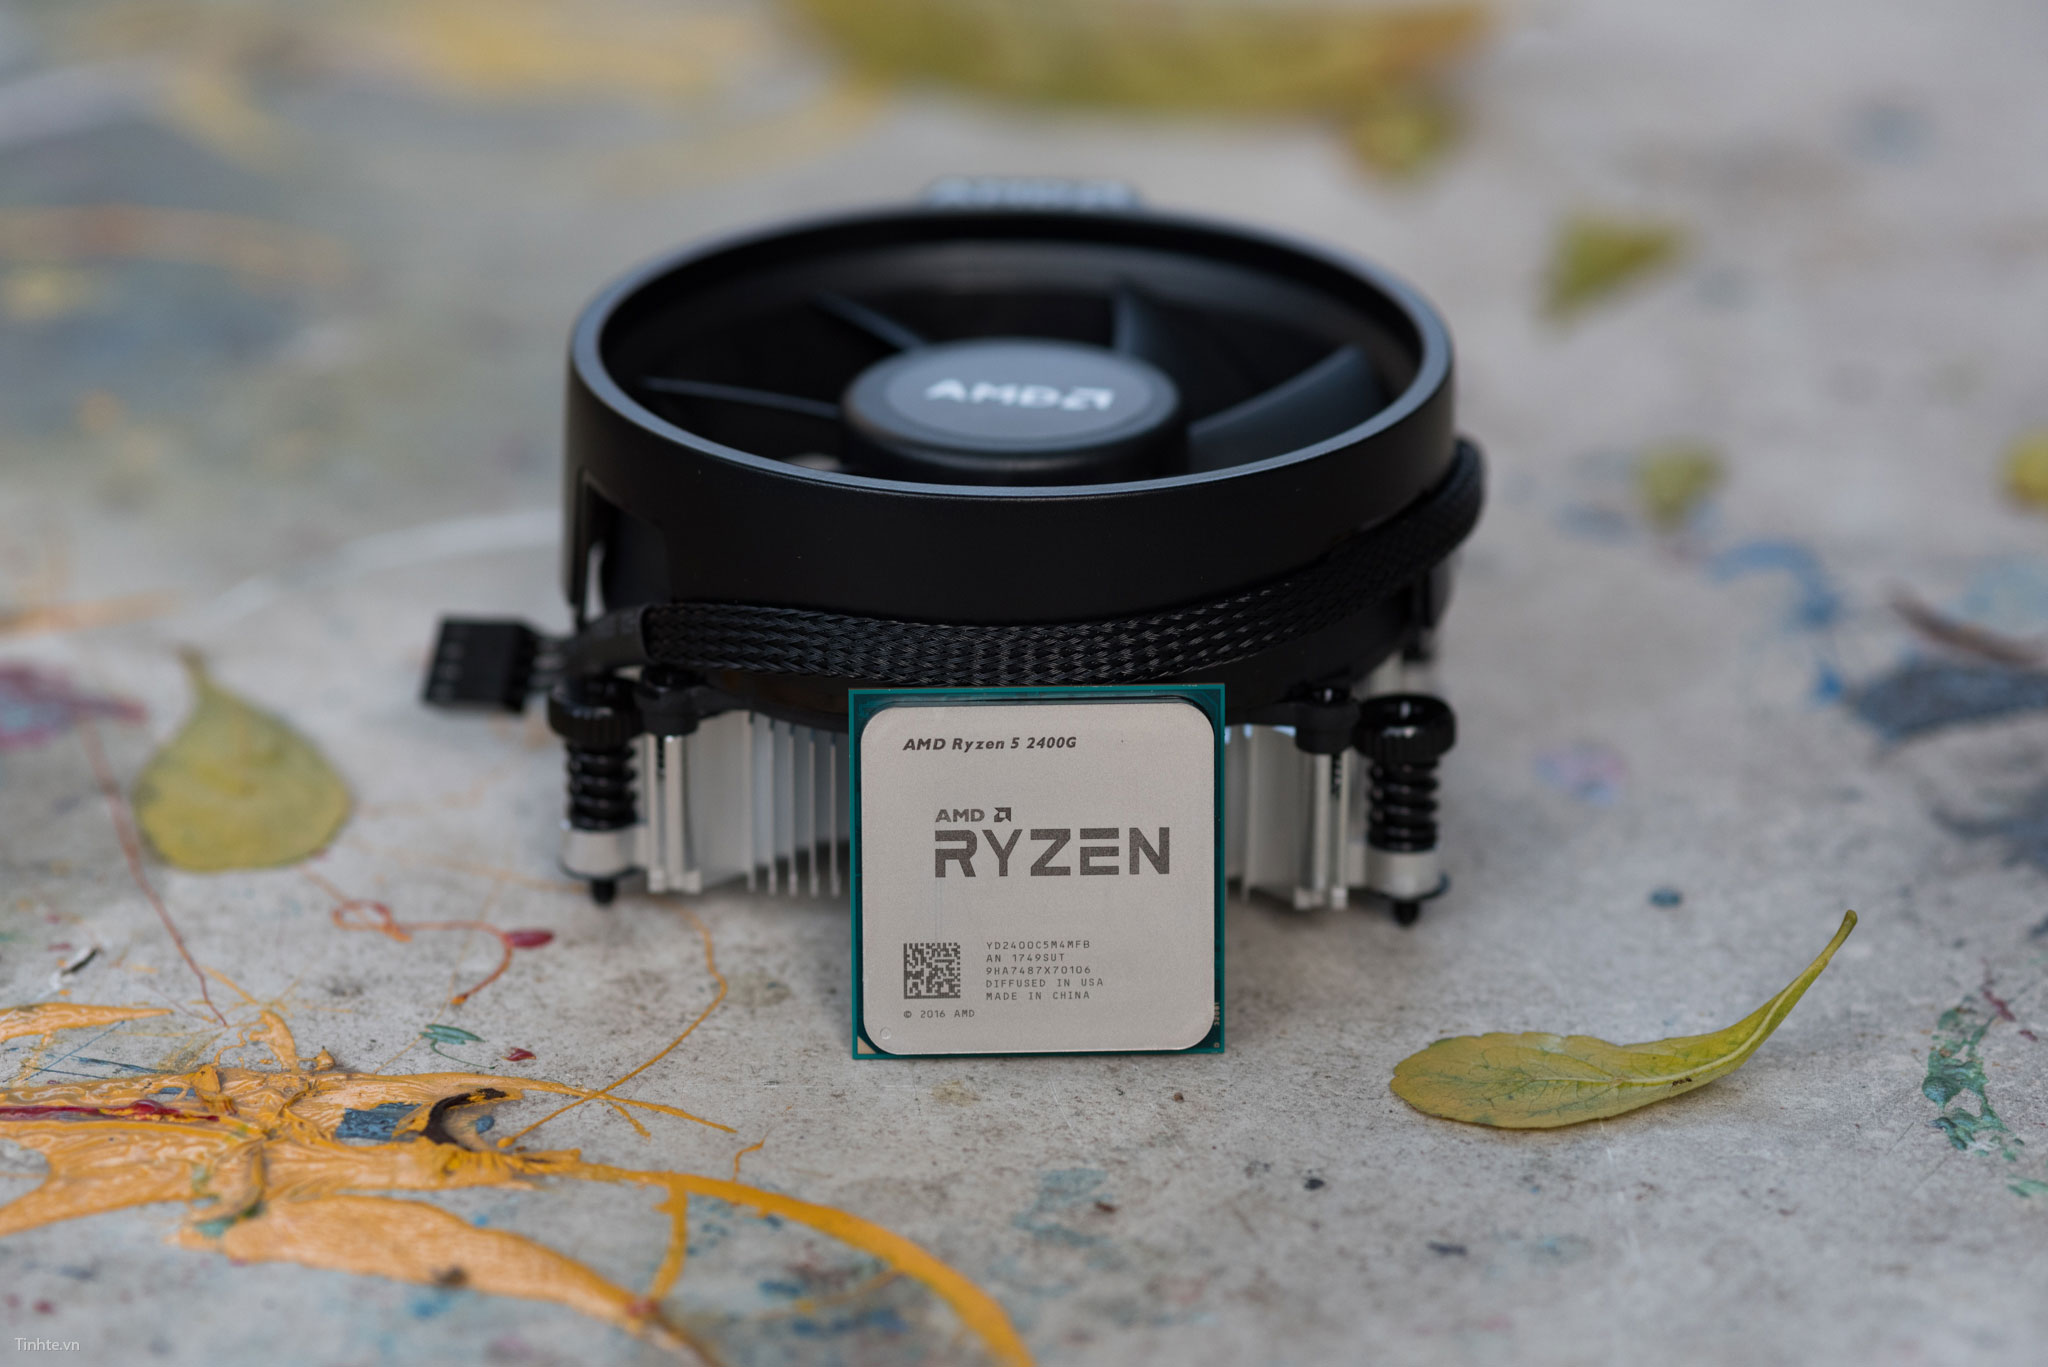 Сборка 5 7500f. Ryzen 5 2400g. Процессор AMD Ryzen 5 2400g. AMD Ryzen 5 Pro 2400g Box. AMD Ryzen 5 2400g ДНС.